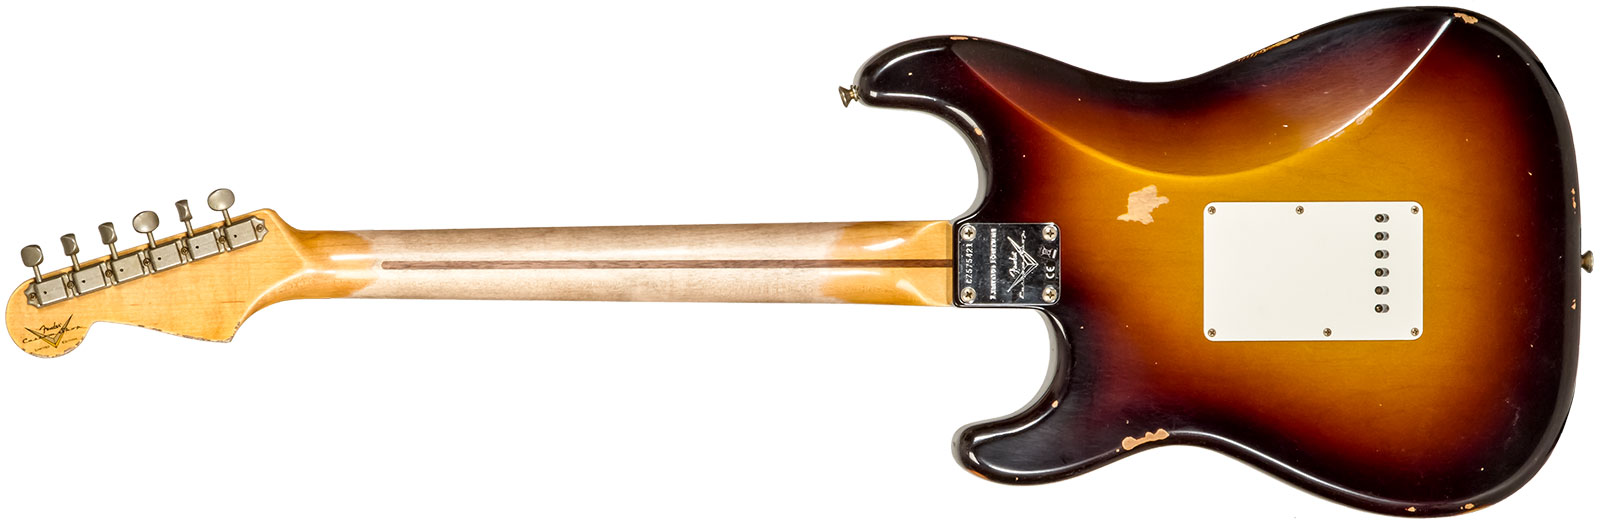 Fender Custom Shop Strat 1957 3s Trem Mn #cz575421 - Relic 2-color Sunburst - Guitare Électrique Forme Str - Variation 1